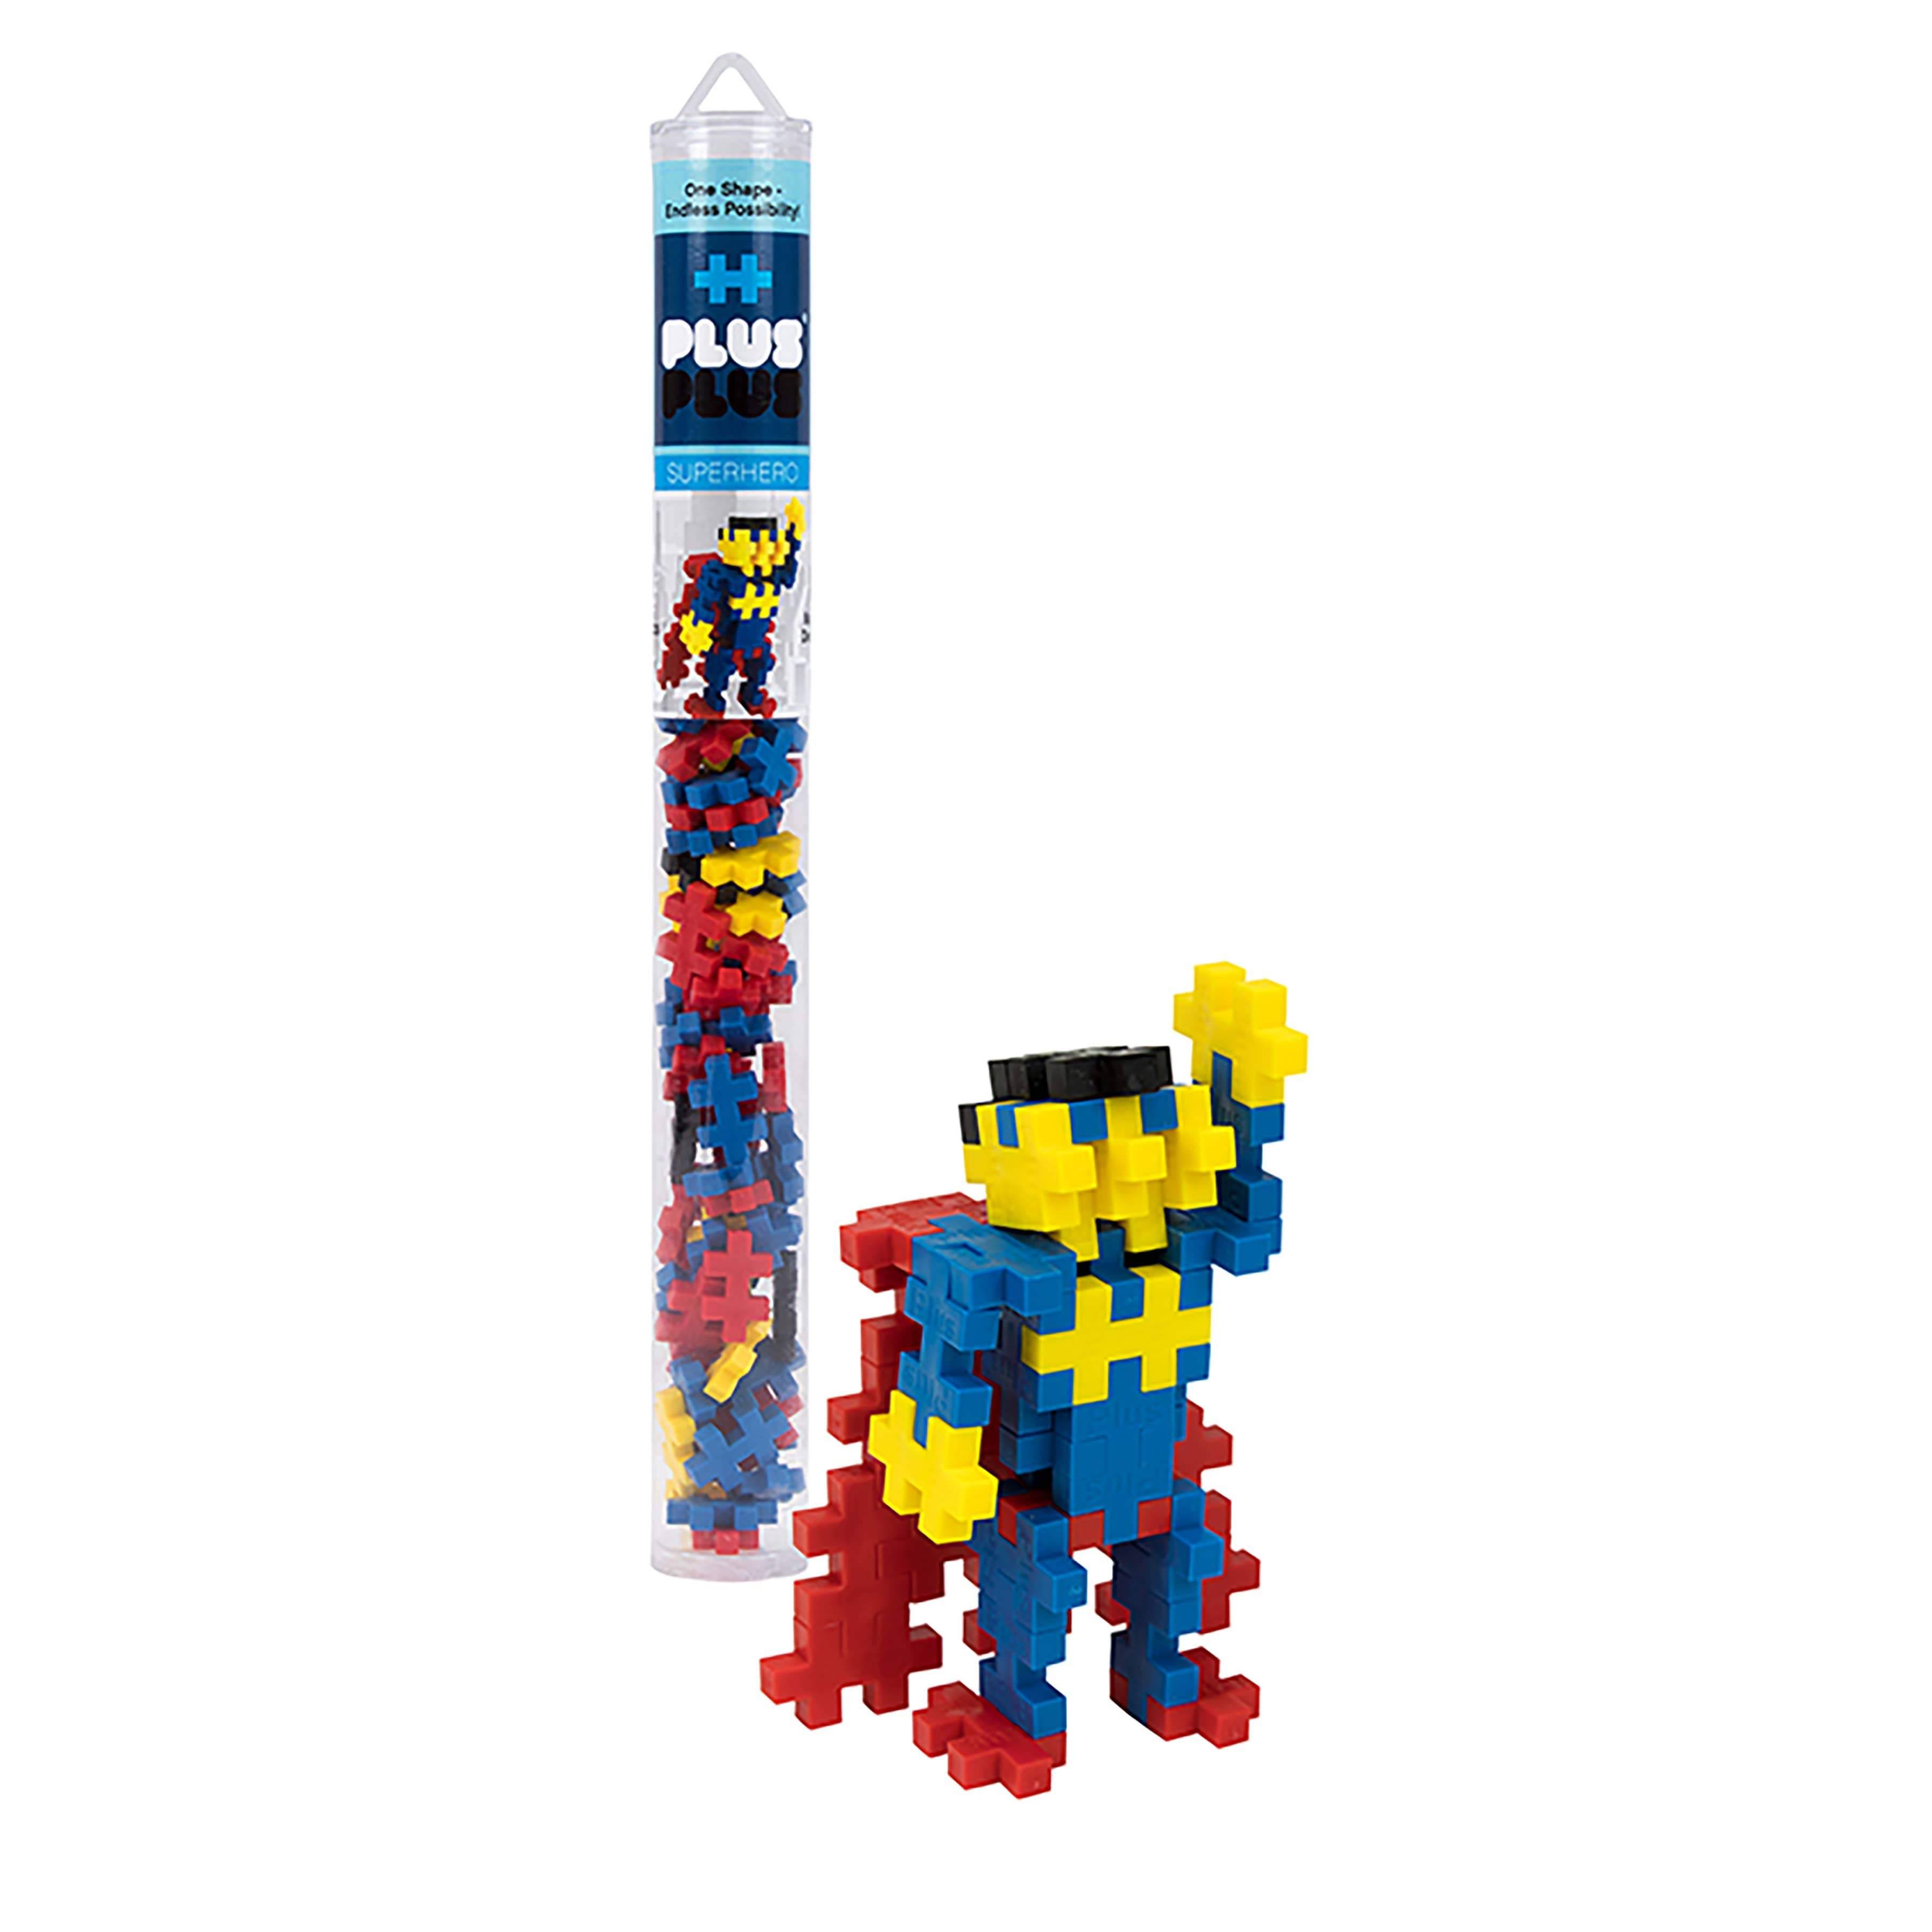 PLUS PLUS - Superhero - 70 Piece Tube Construction Building Stem/Steam Toy Kids Mini Puzzle Blocks